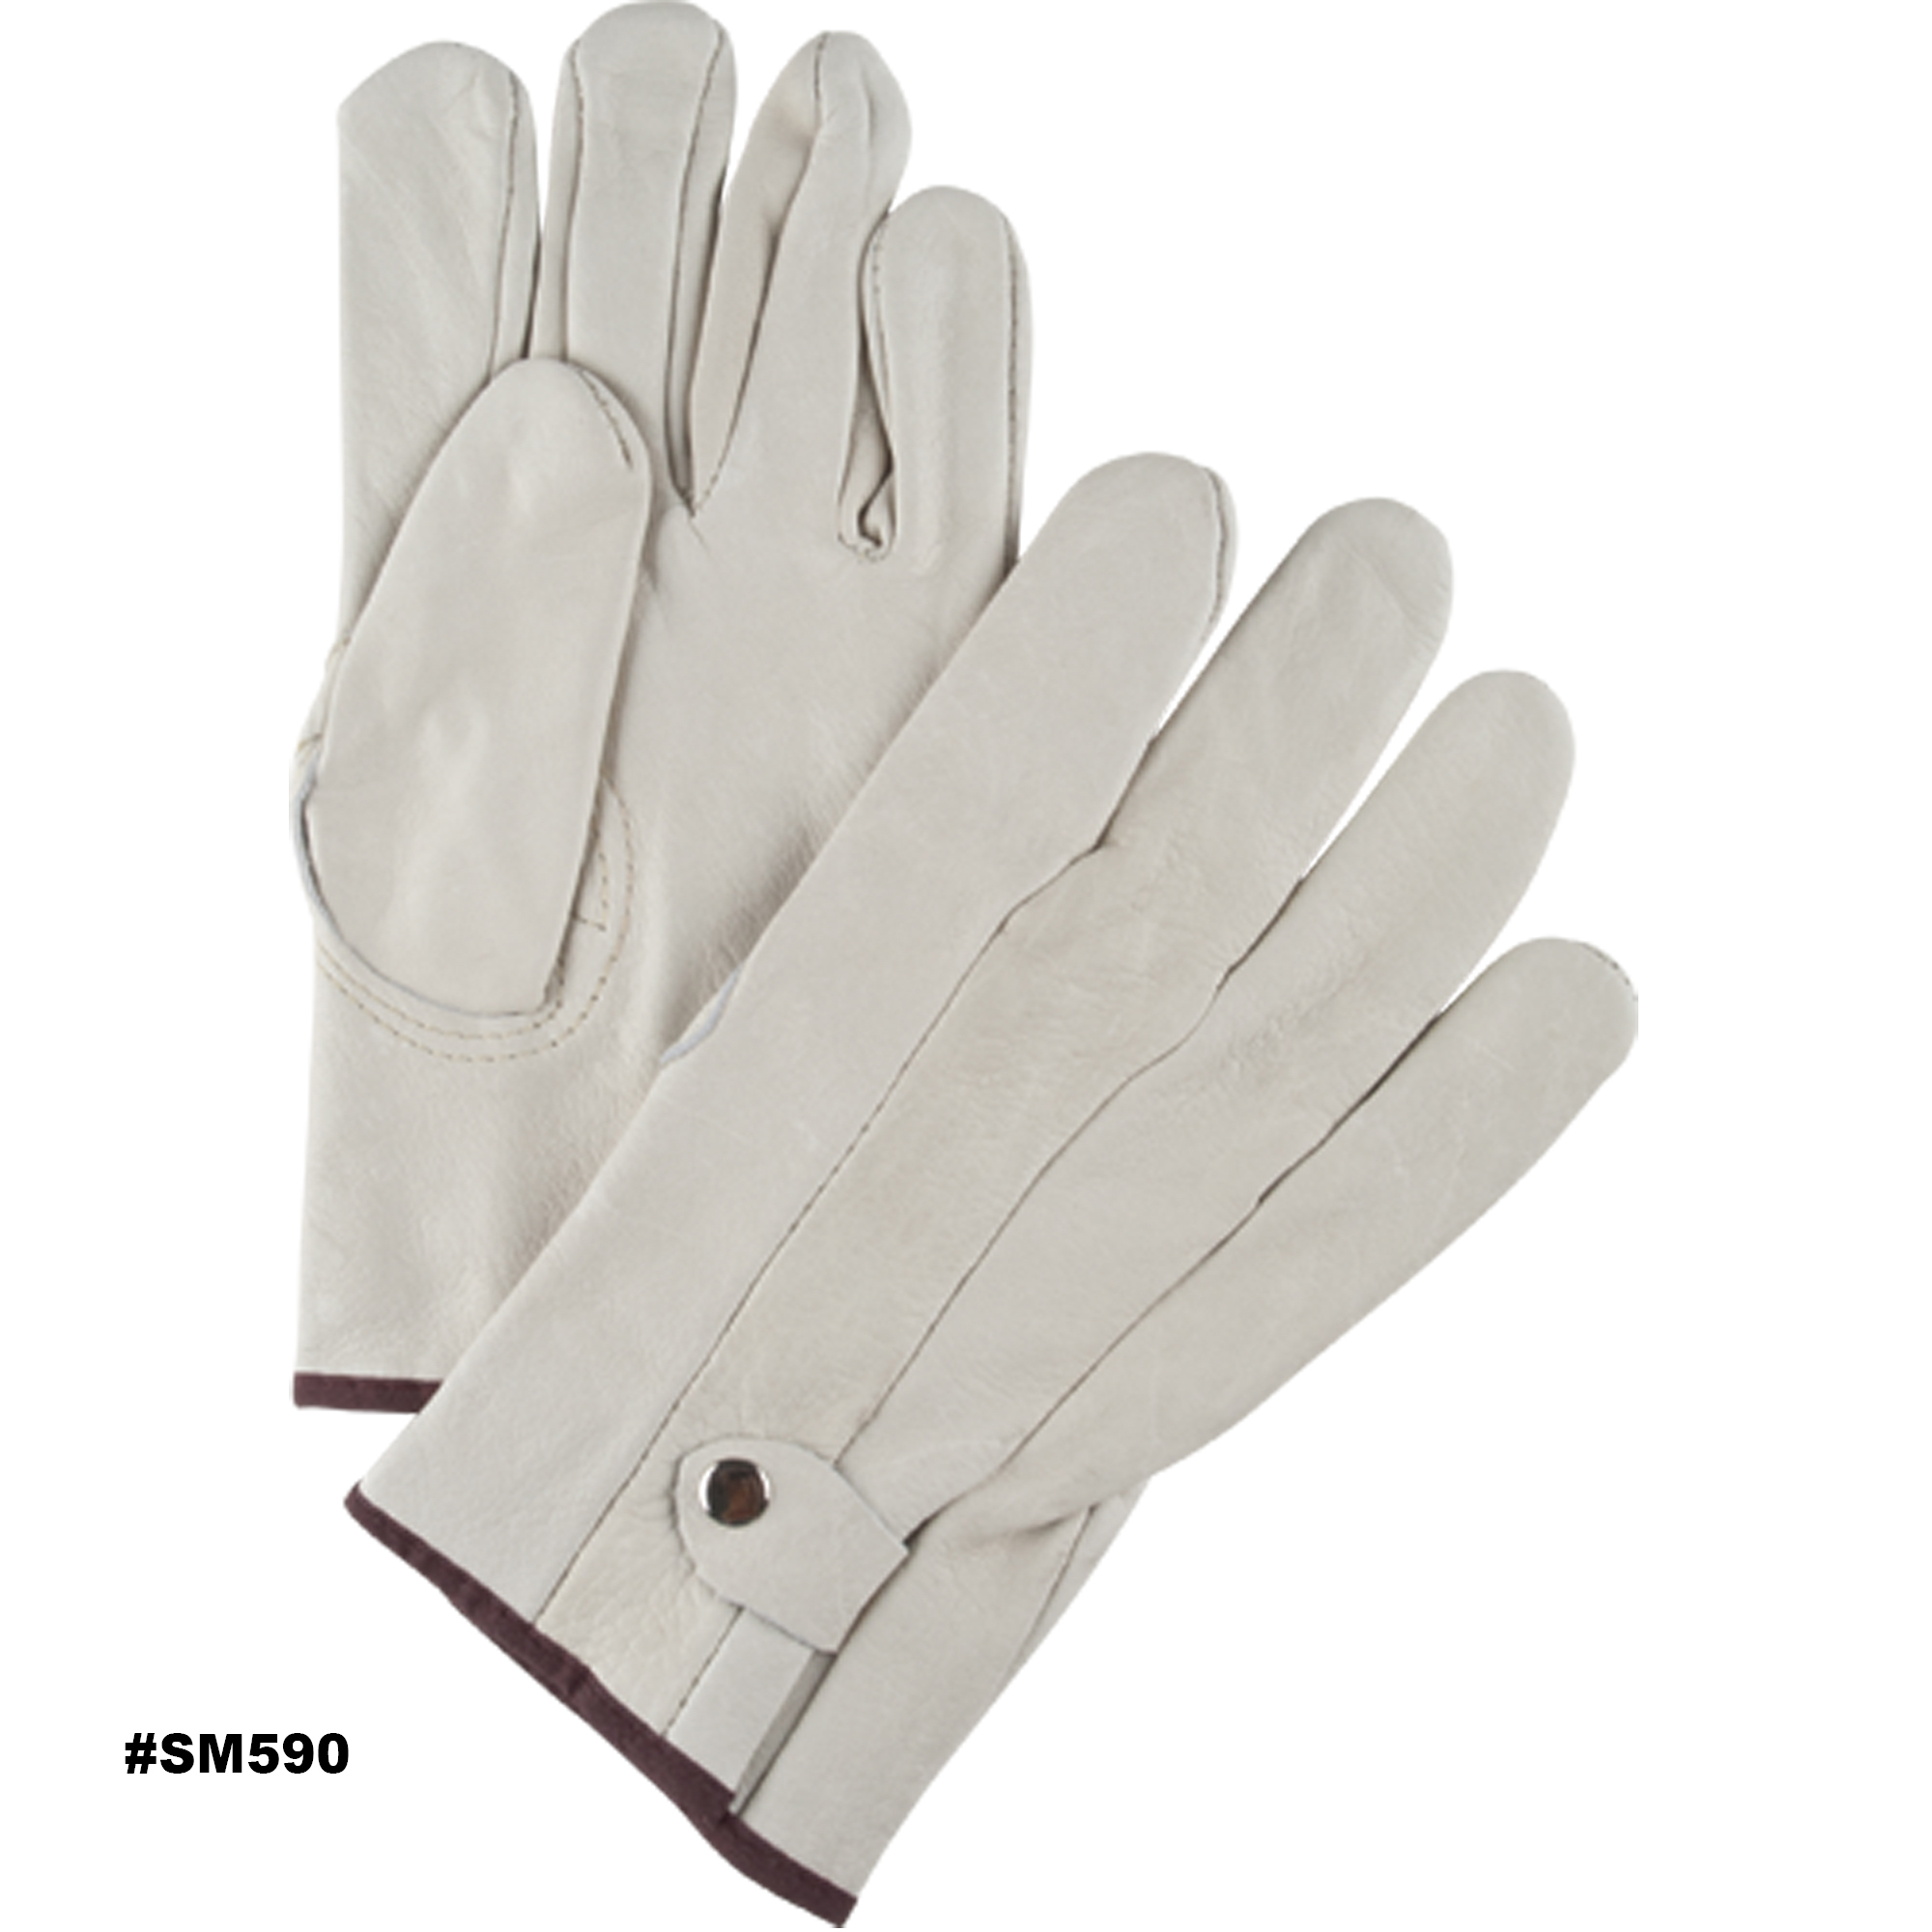 Standard Quality Grain Cowhide Ropers Glove Model: SM590